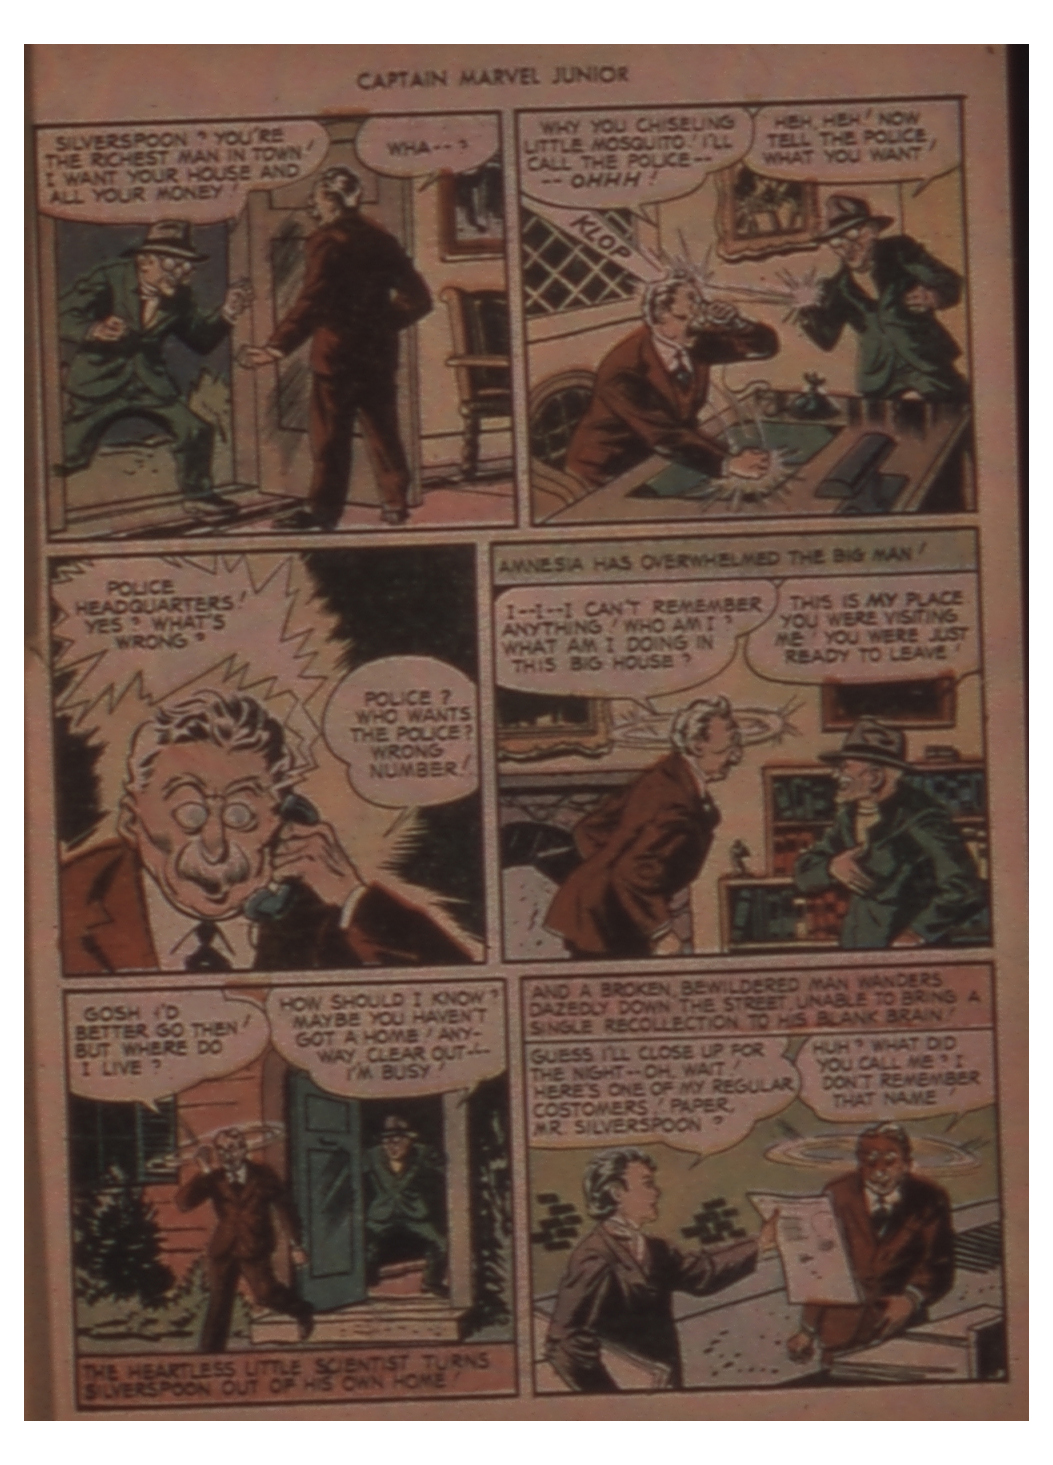 Read online Captain Marvel, Jr. comic -  Issue #18 - 31